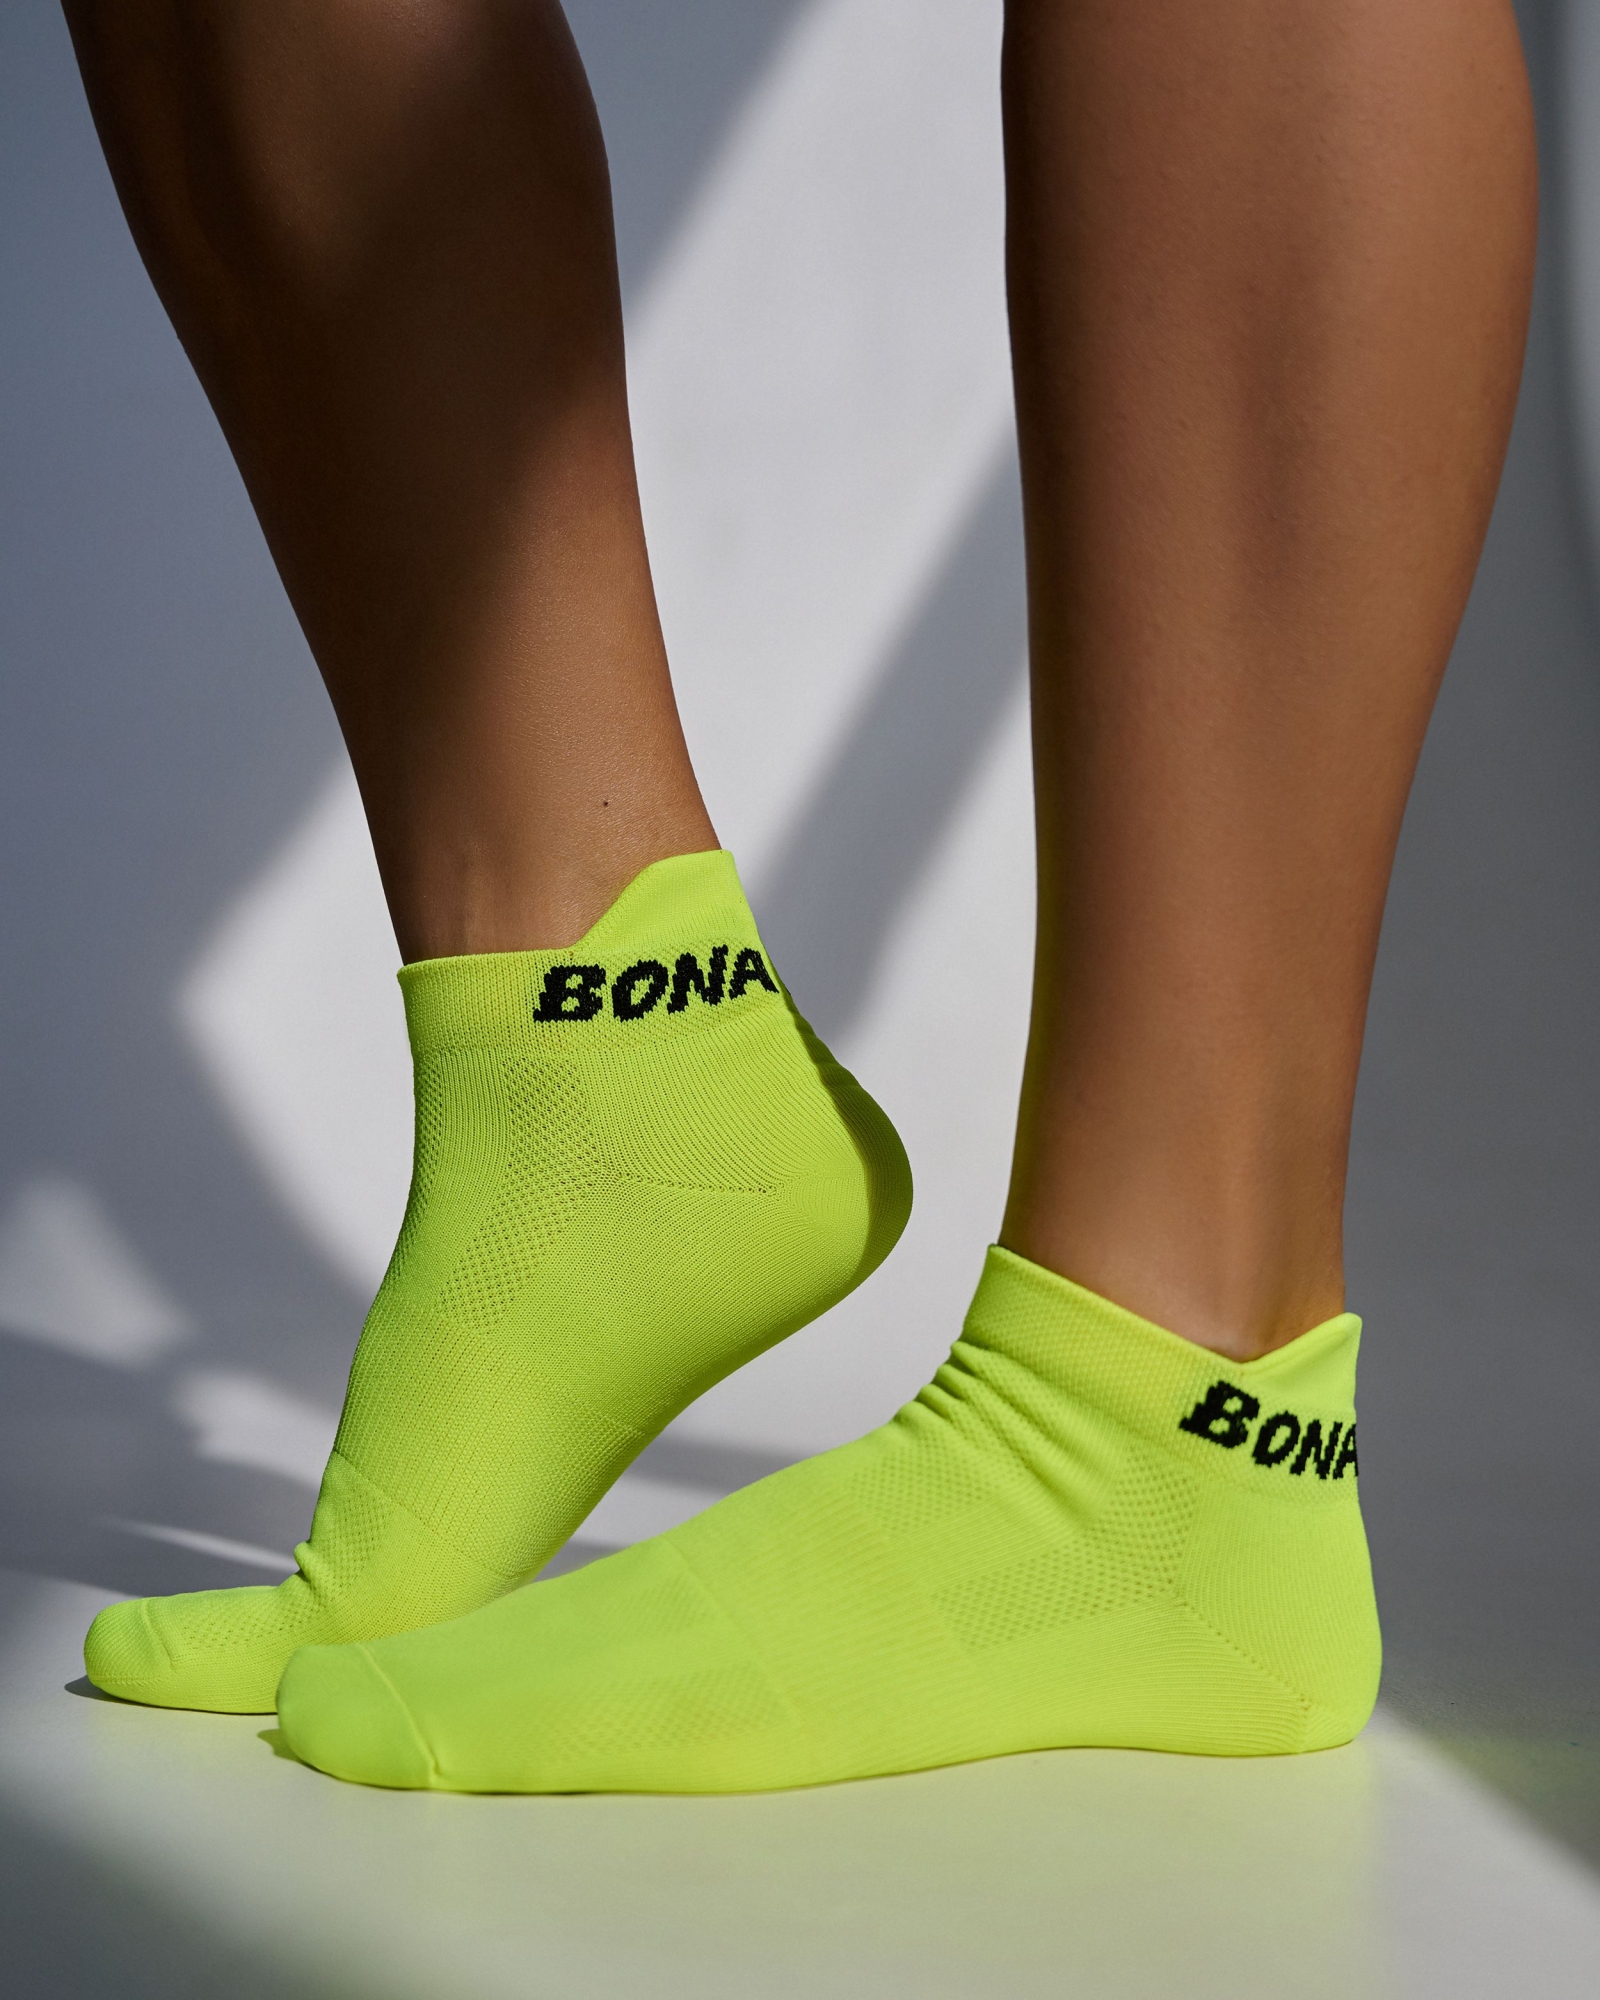 Bona Fide: Color Set of Socks(3 пары) фото 4